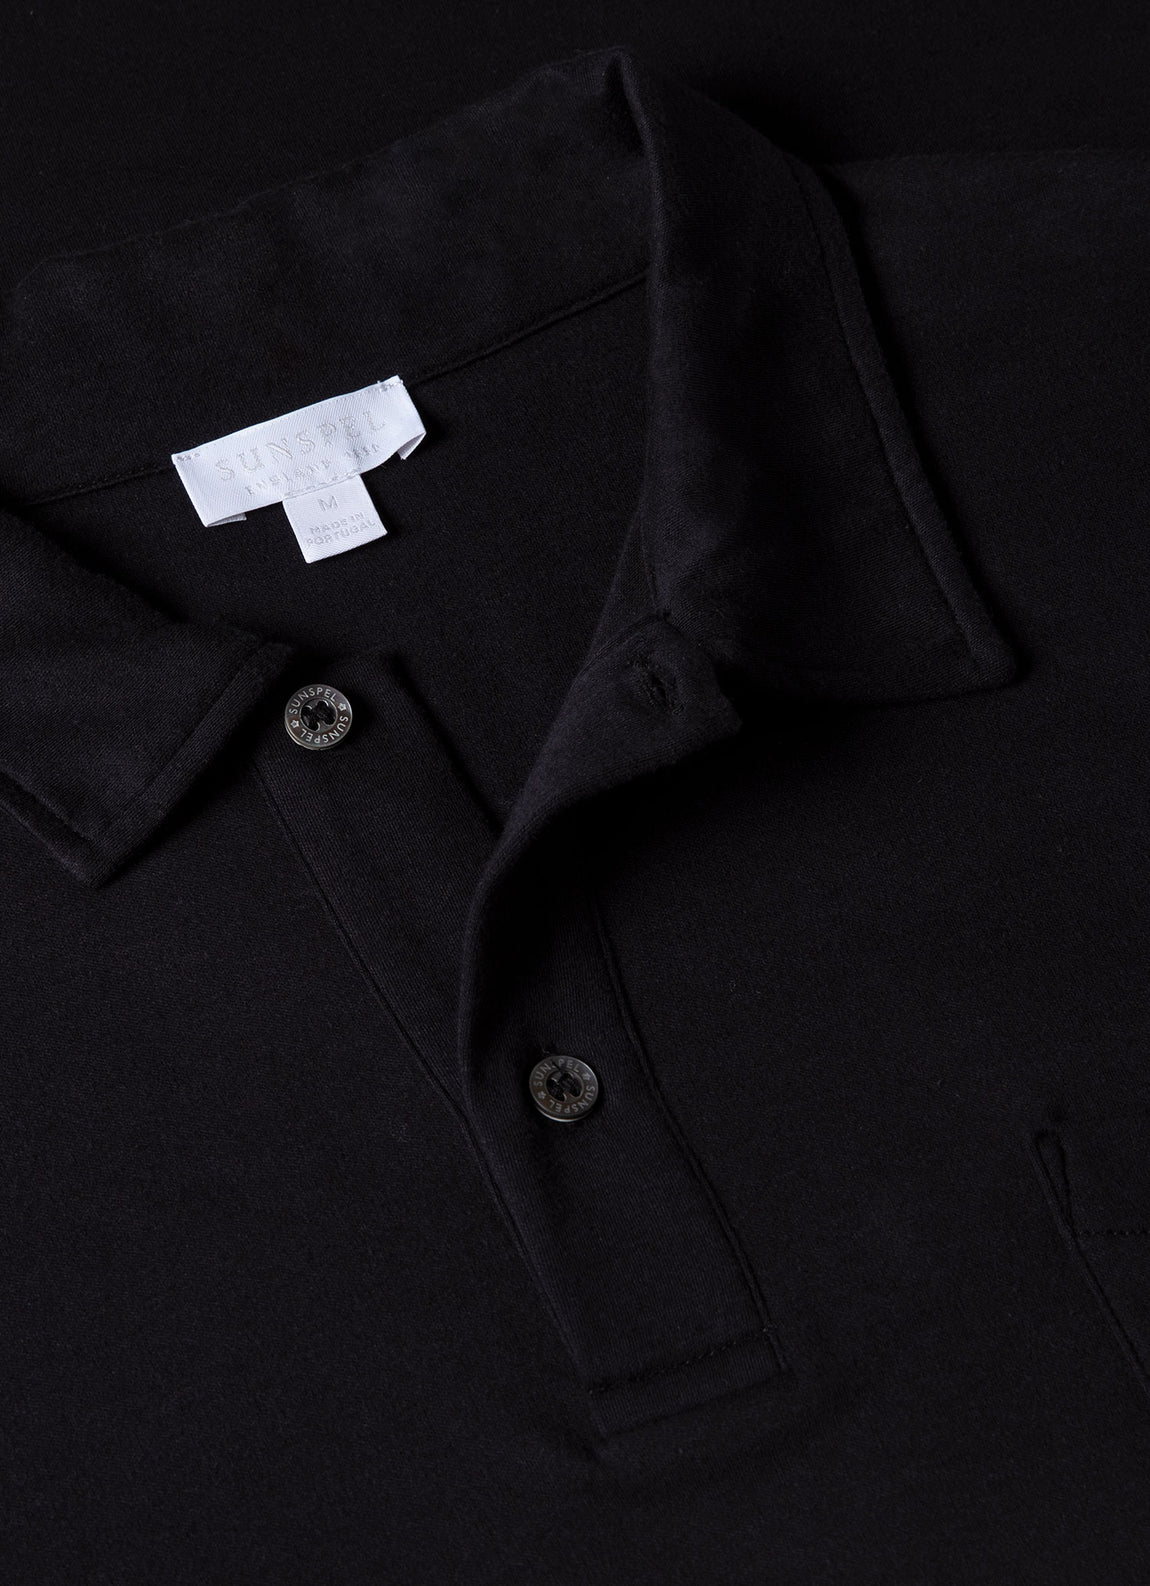 Men's Sea Island Cotton Riviera Polo Shirt in Black | Sunspel